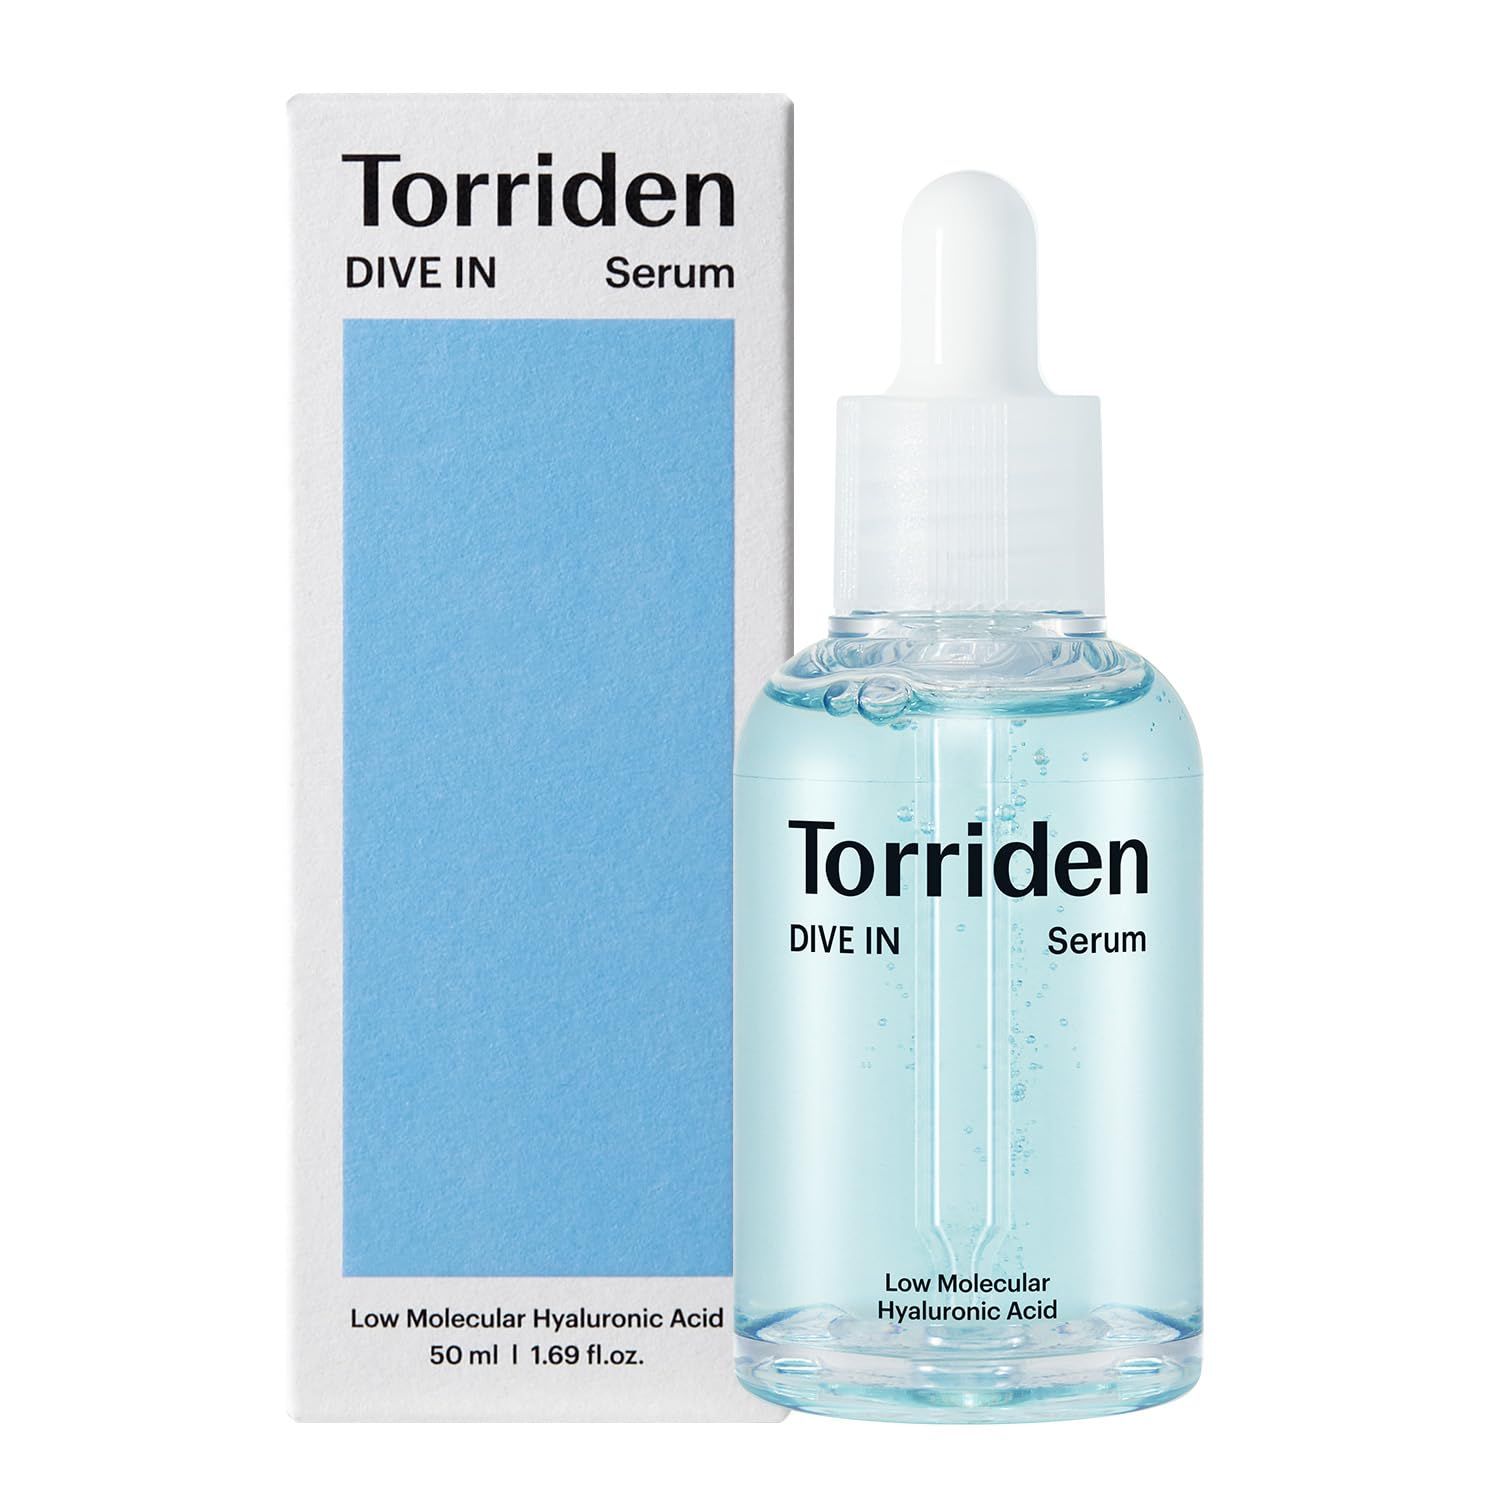 Torriden DIVE-IN Low-Molecular Hyaluronic Acid Serum, 1.69 fl oz (2 Pack) | Fragrance-free Face S... | Amazon (US)